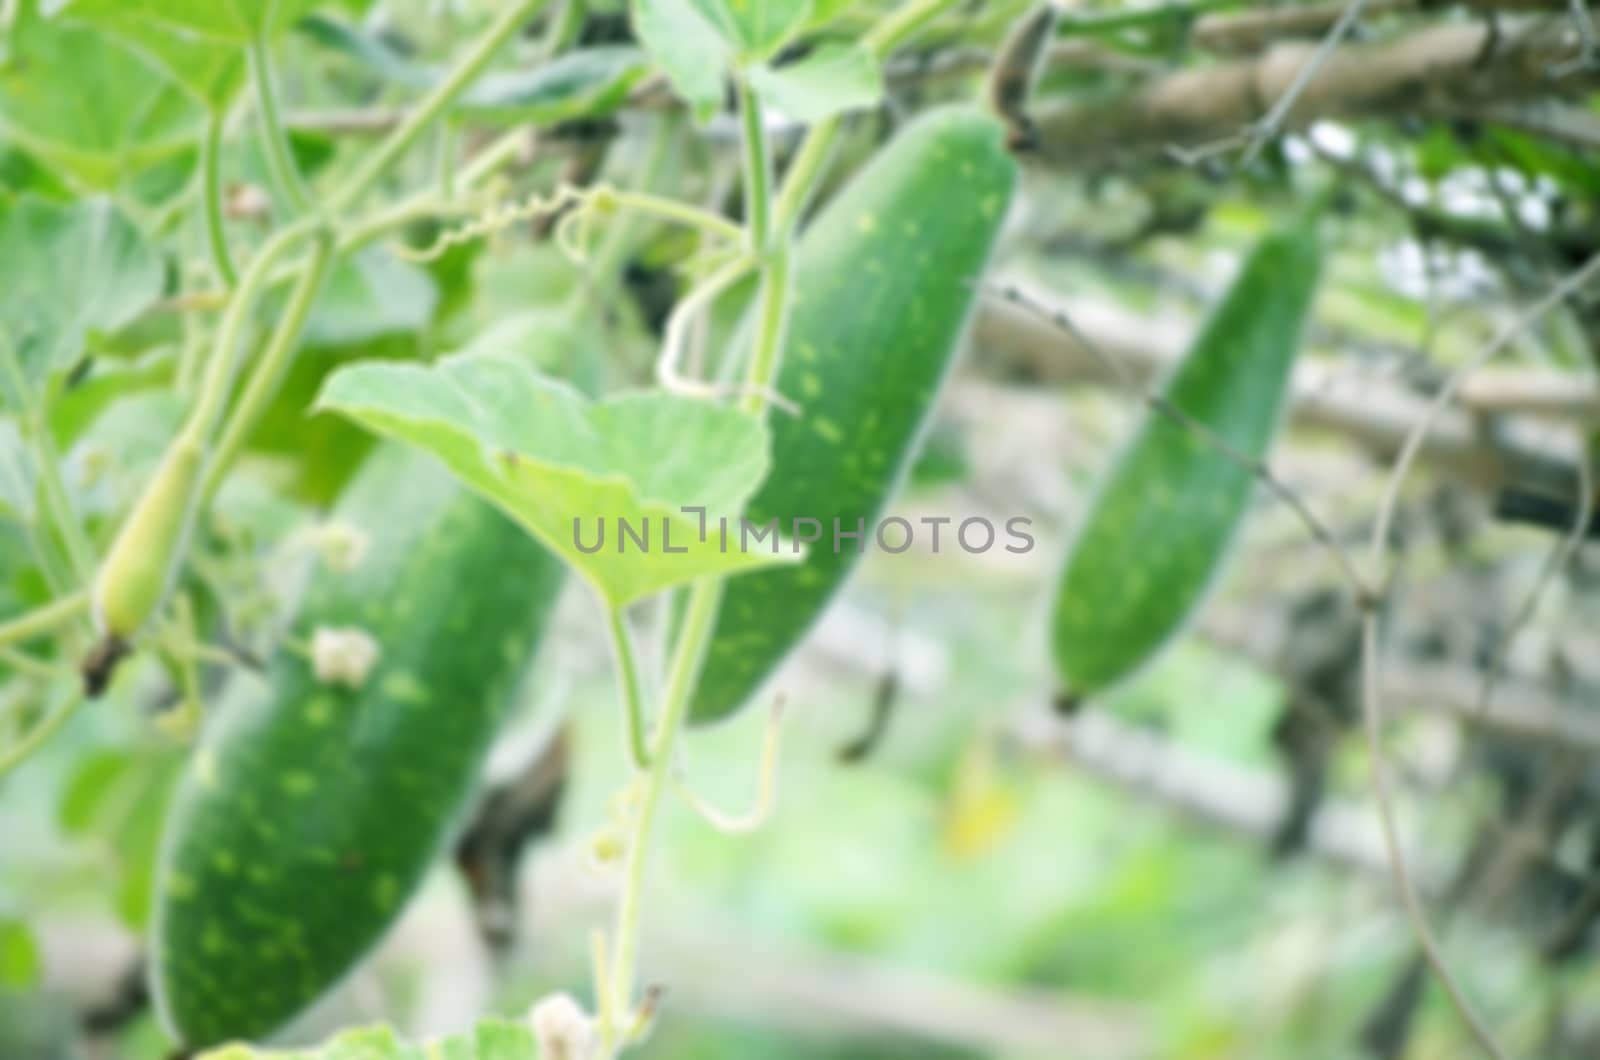 Natural green leaf vegetables and meadows lens blur background by Emdaduljs